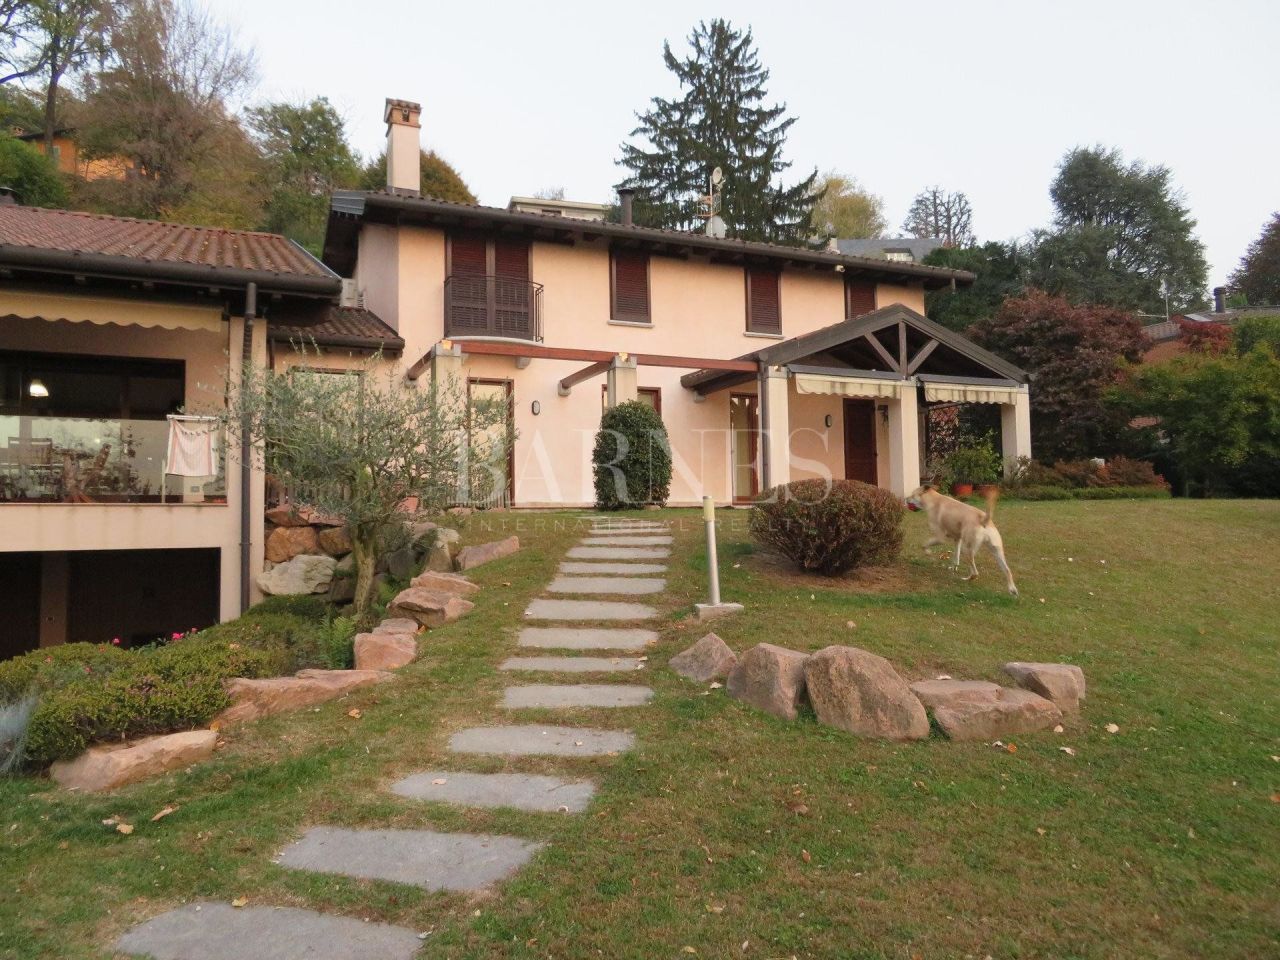 Casa en Varese, Italia - imagen 1